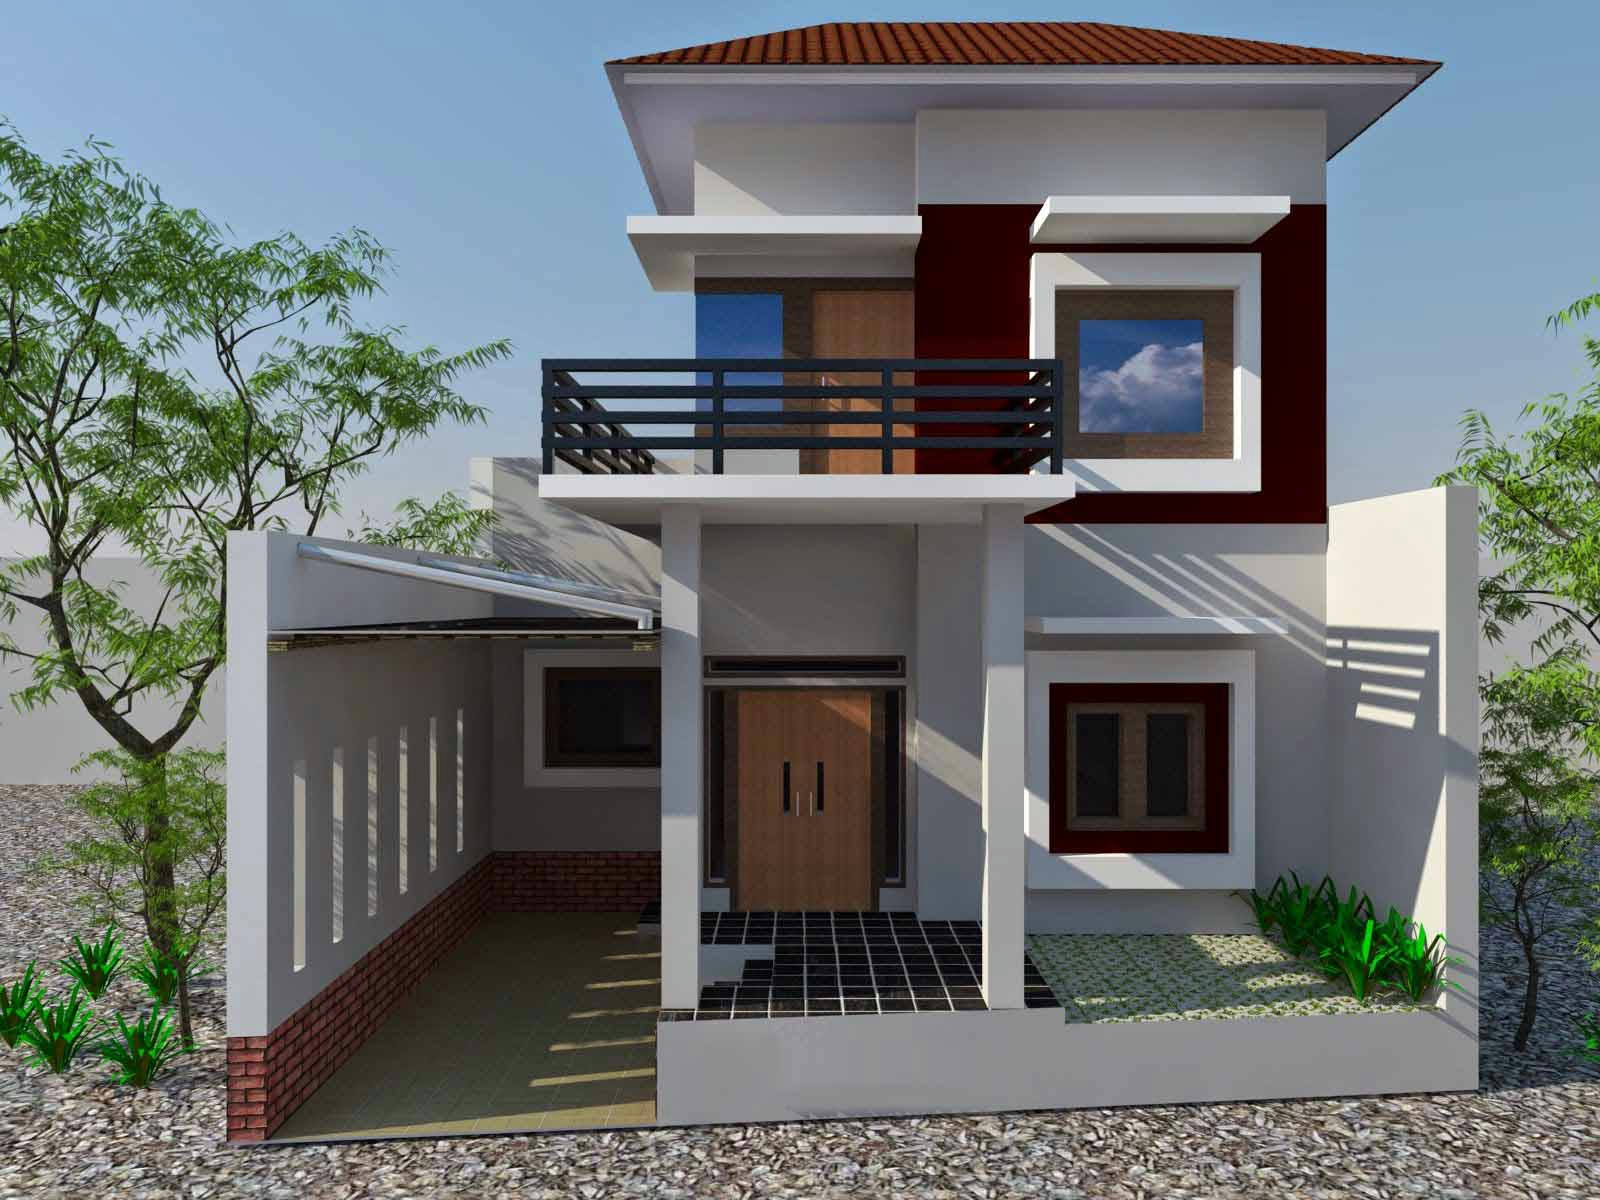 Contoh Gambar Rumah Minimalis Modern 2 Lantai Terbaru Creo House